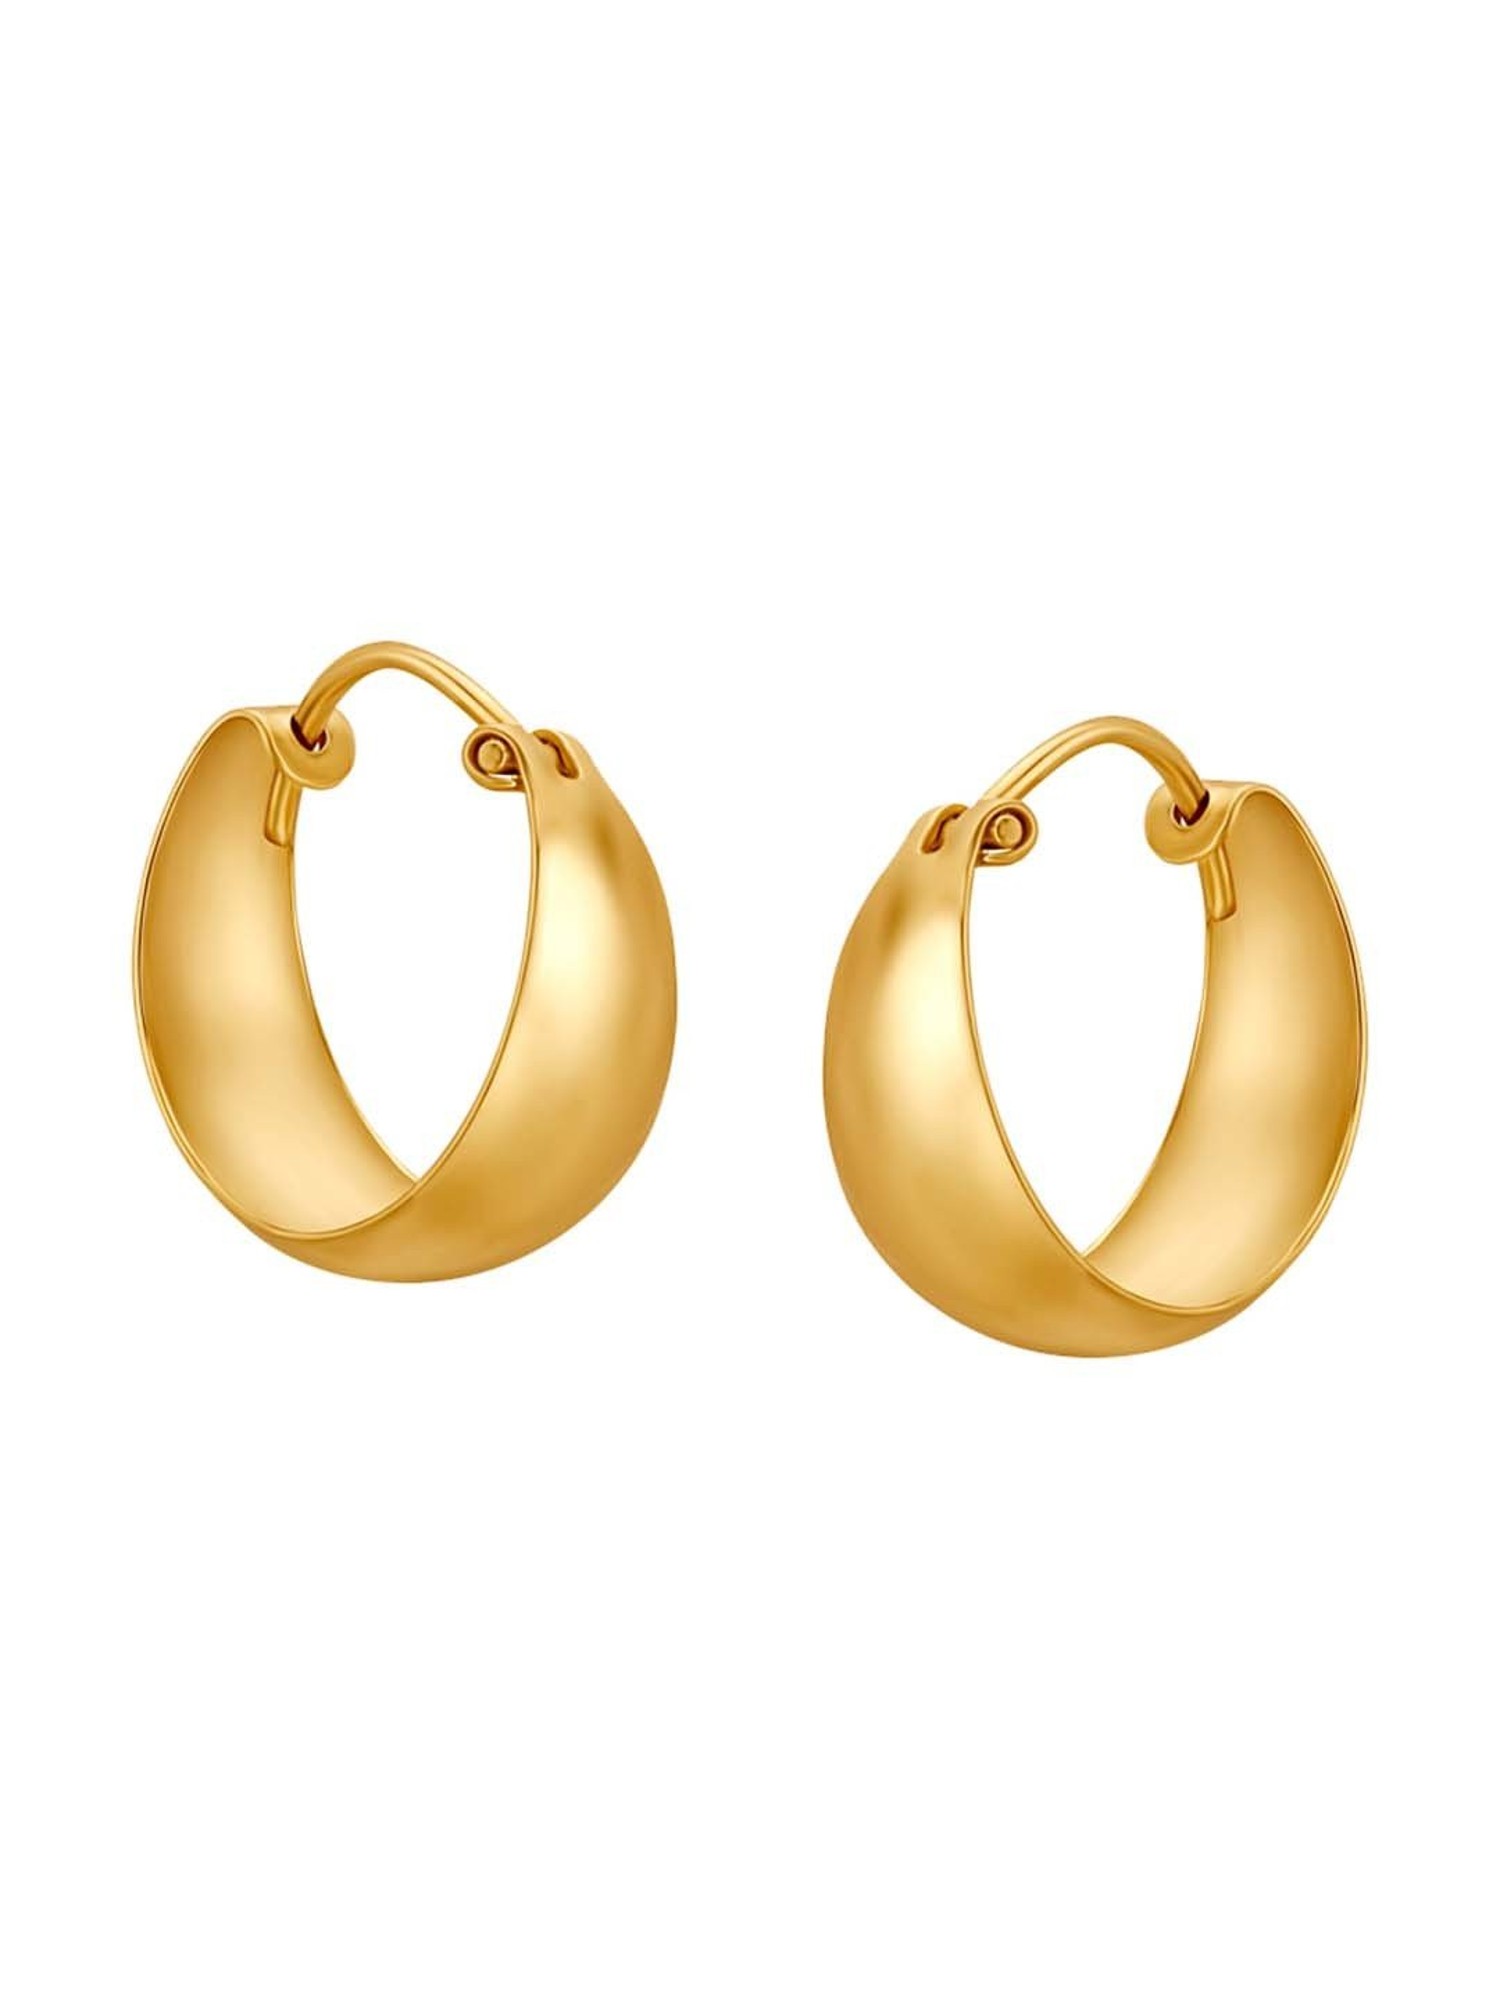 Charismatic Gold and Kundan Glass Drop Earrings